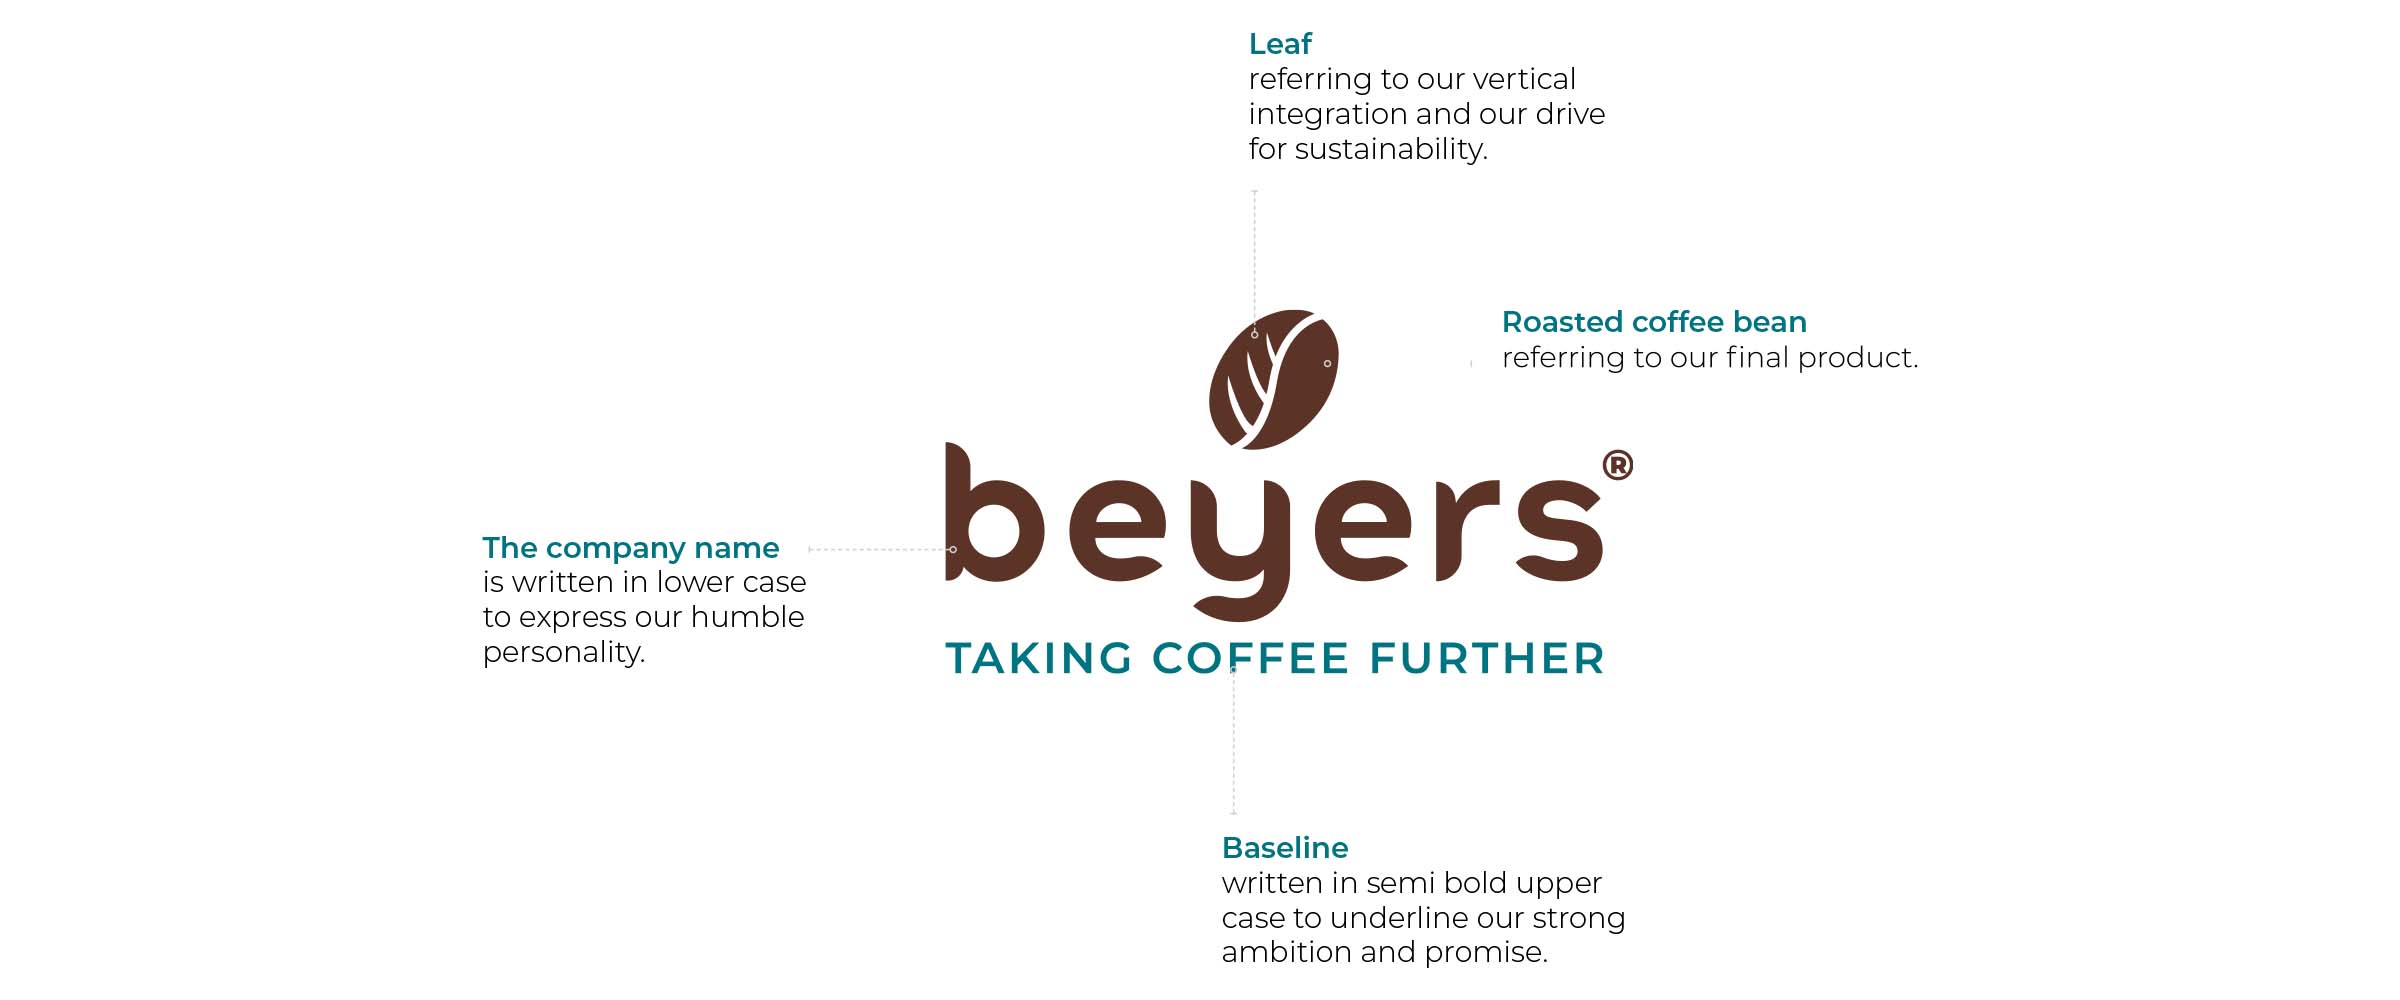 Beyers koffie - taking coffee further logo